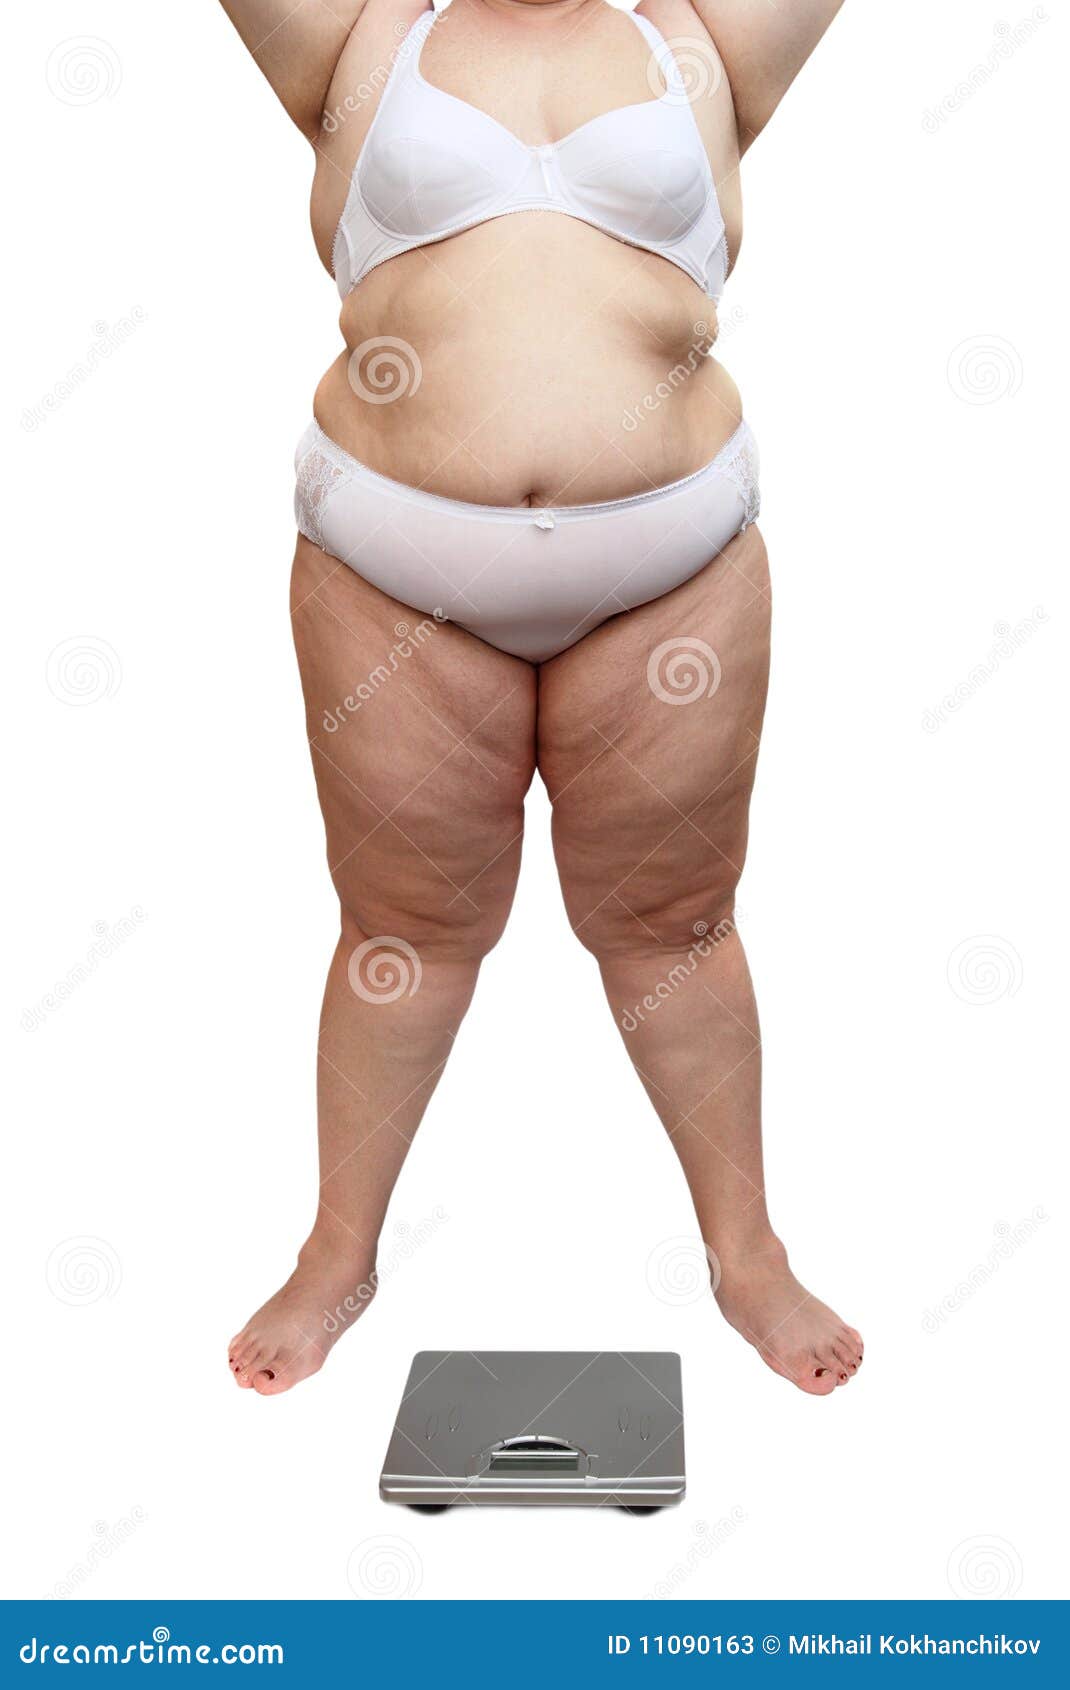 Premium Photo  Cropped photo of overweight woman in underwear